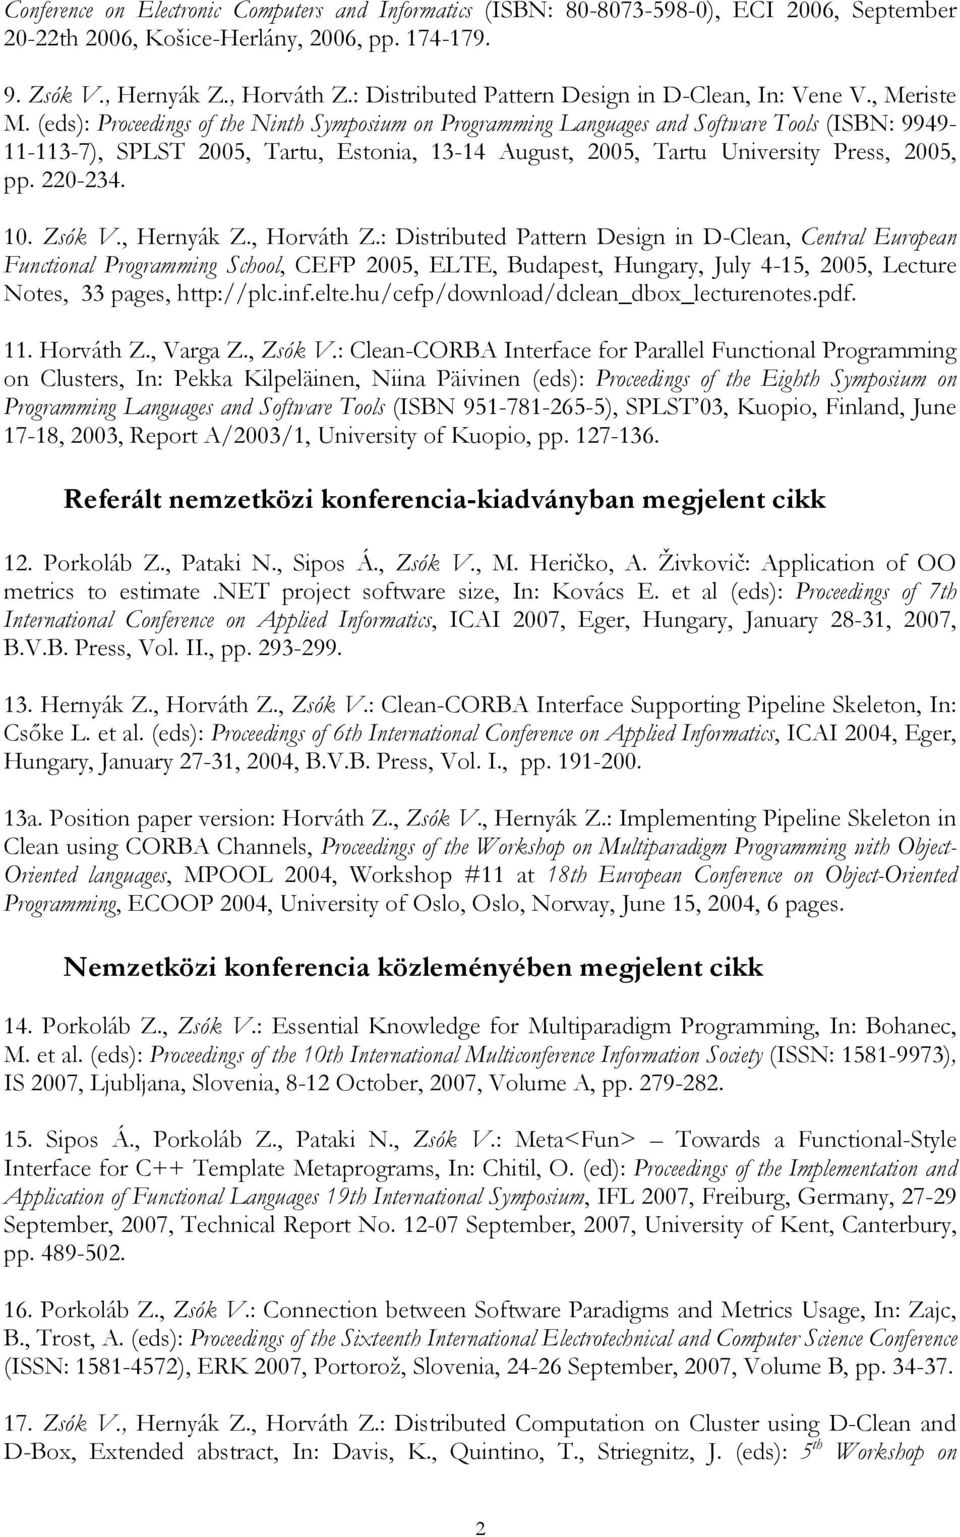 (eds): Proceedings of the Ninth Symposium on Programming Languages and Software Tools (ISBN: 9949-11-113-7), SPLST 2005, Tartu, Estonia, 13-14 August, 2005, Tartu University Press, 2005, pp. 220-234.